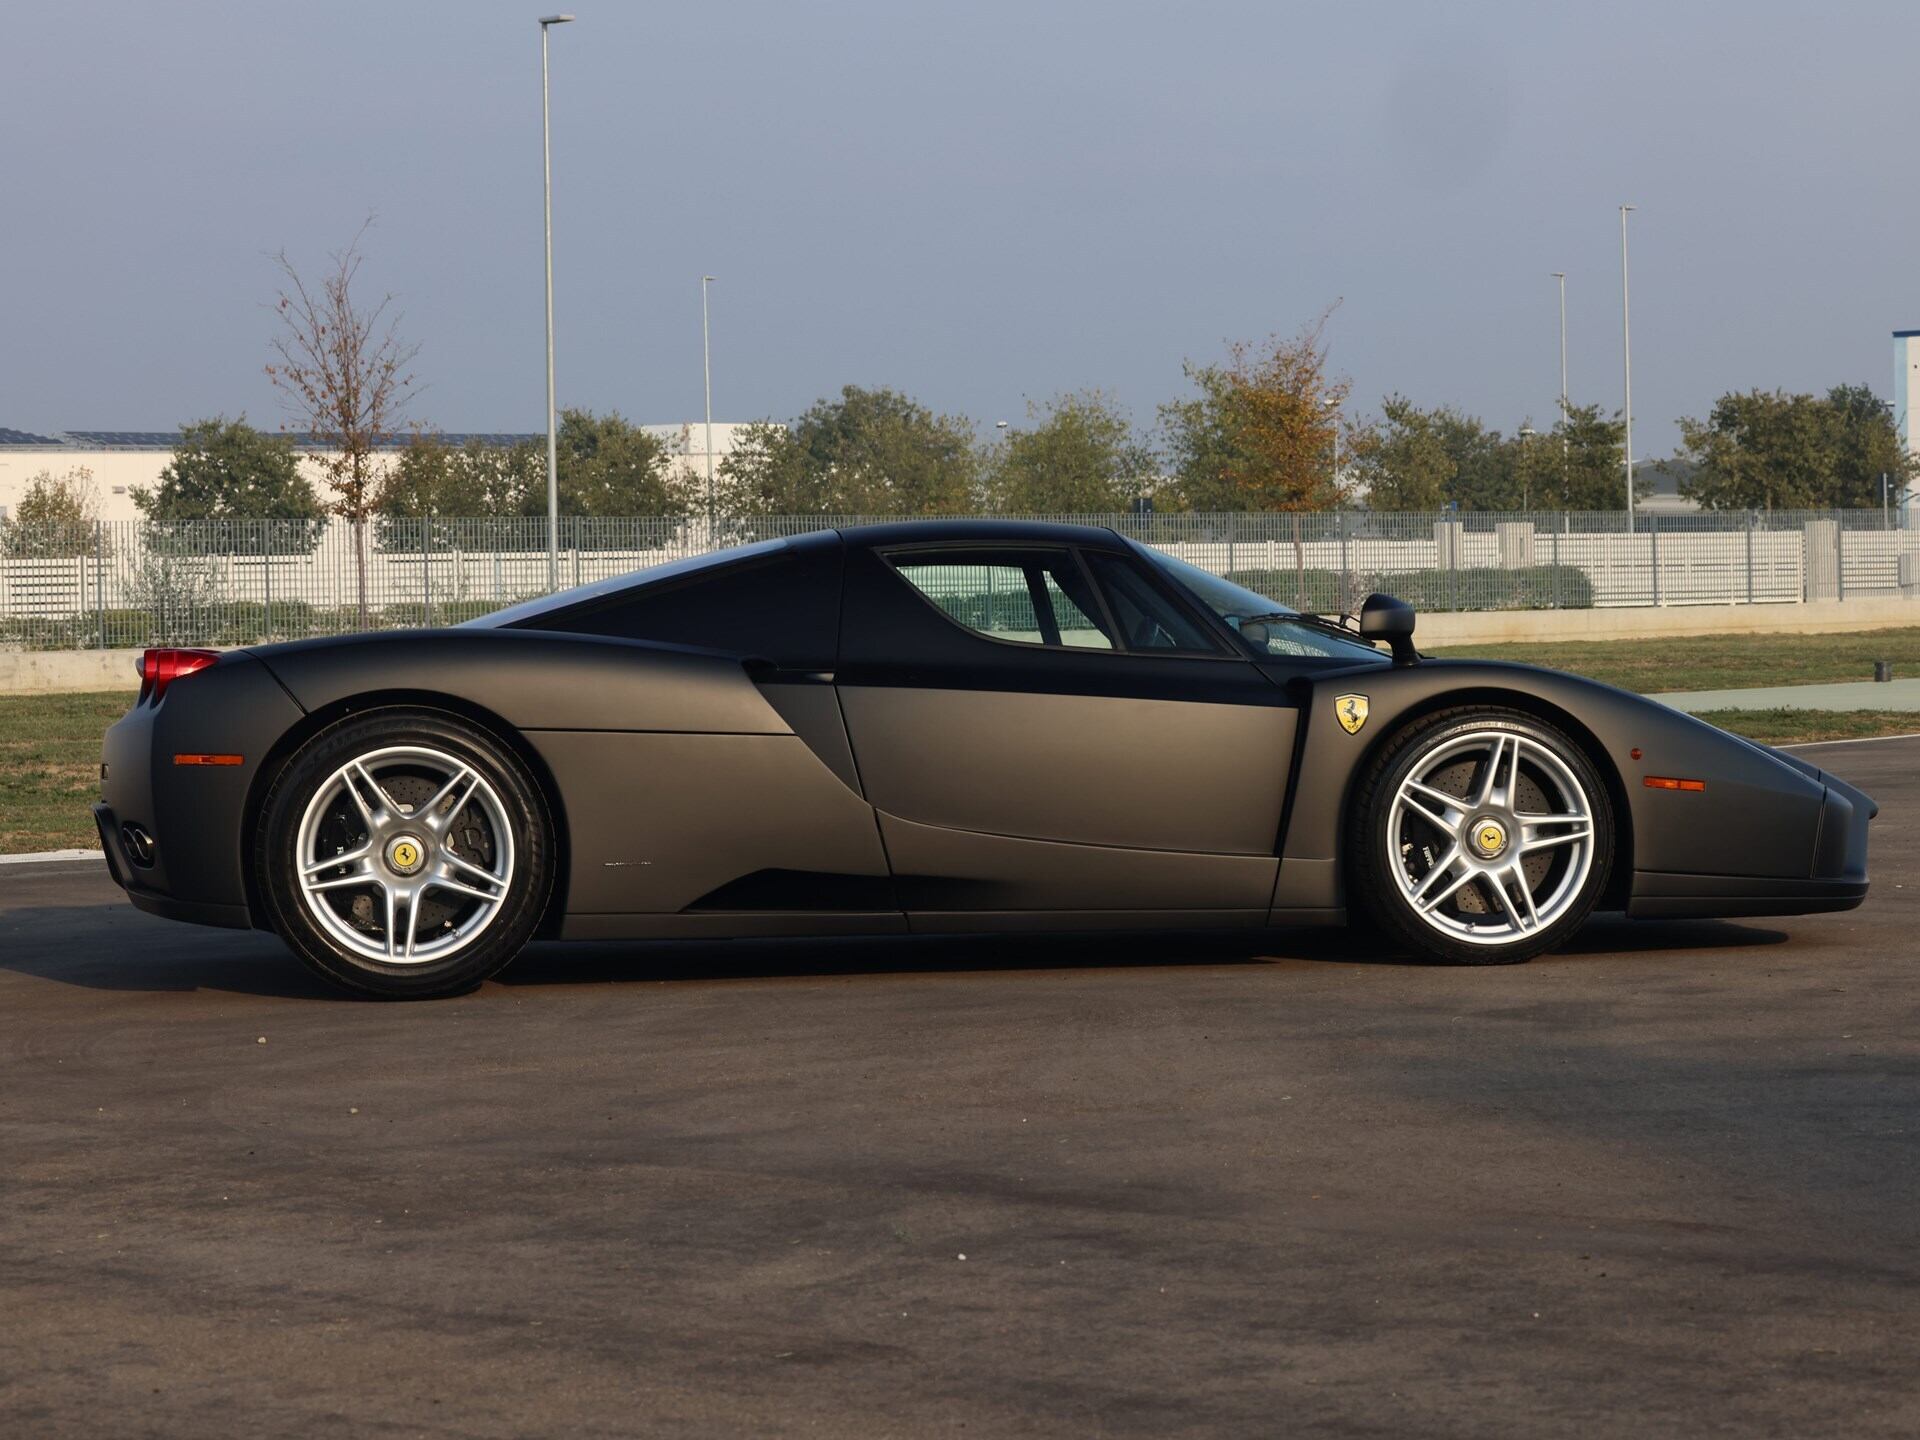 imagen 2 de Sale a subasta un Ferrari Enzo negro mate único excepcional.